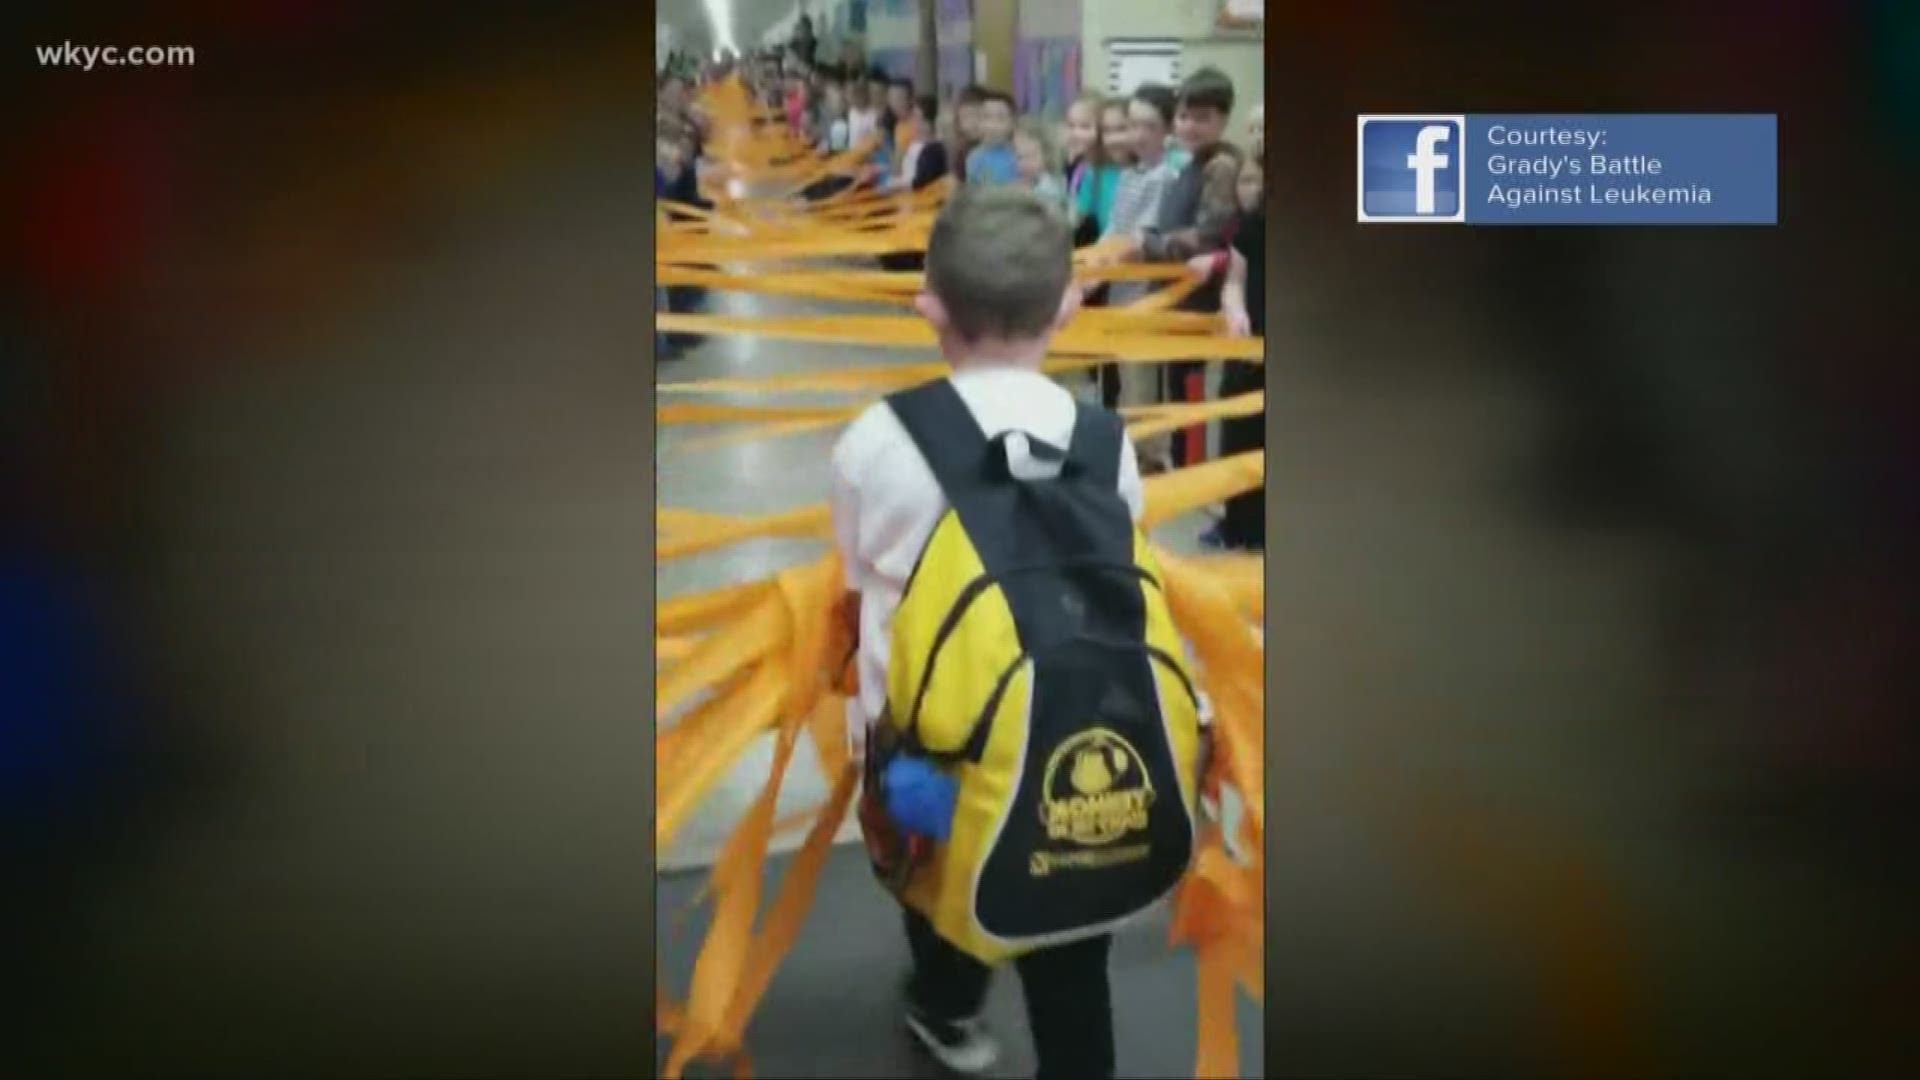 Warren boy returns to school after battling leukemia